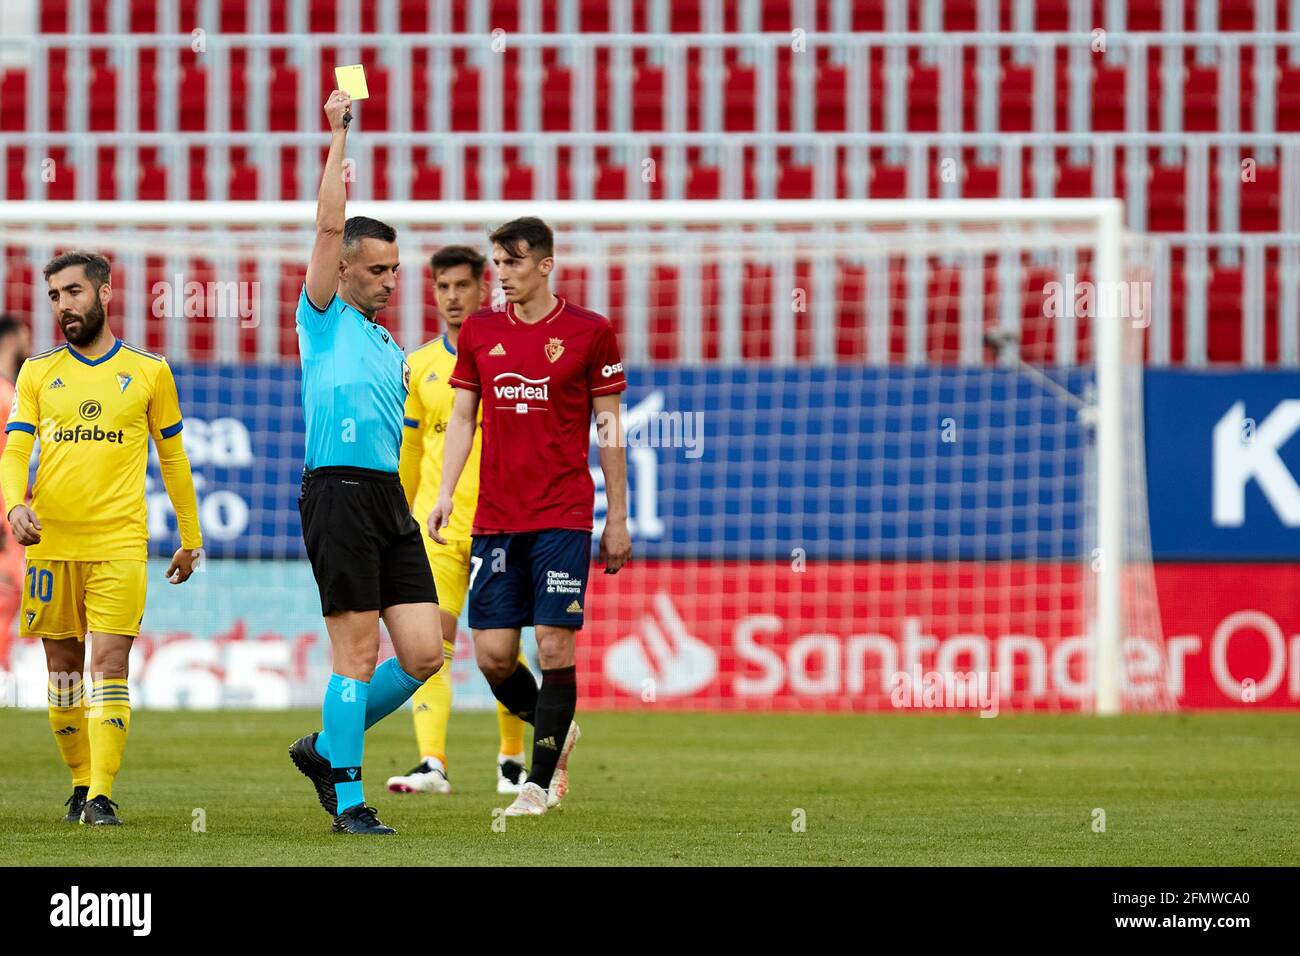 Pamplona, Spain. 11th May, 2021. The referee gives a yellow card to Budimir  during the Spanish La Liga Santander match between CA Osasuna and Cádiz CF  at the Sadar stadium.(Finale Score; CA